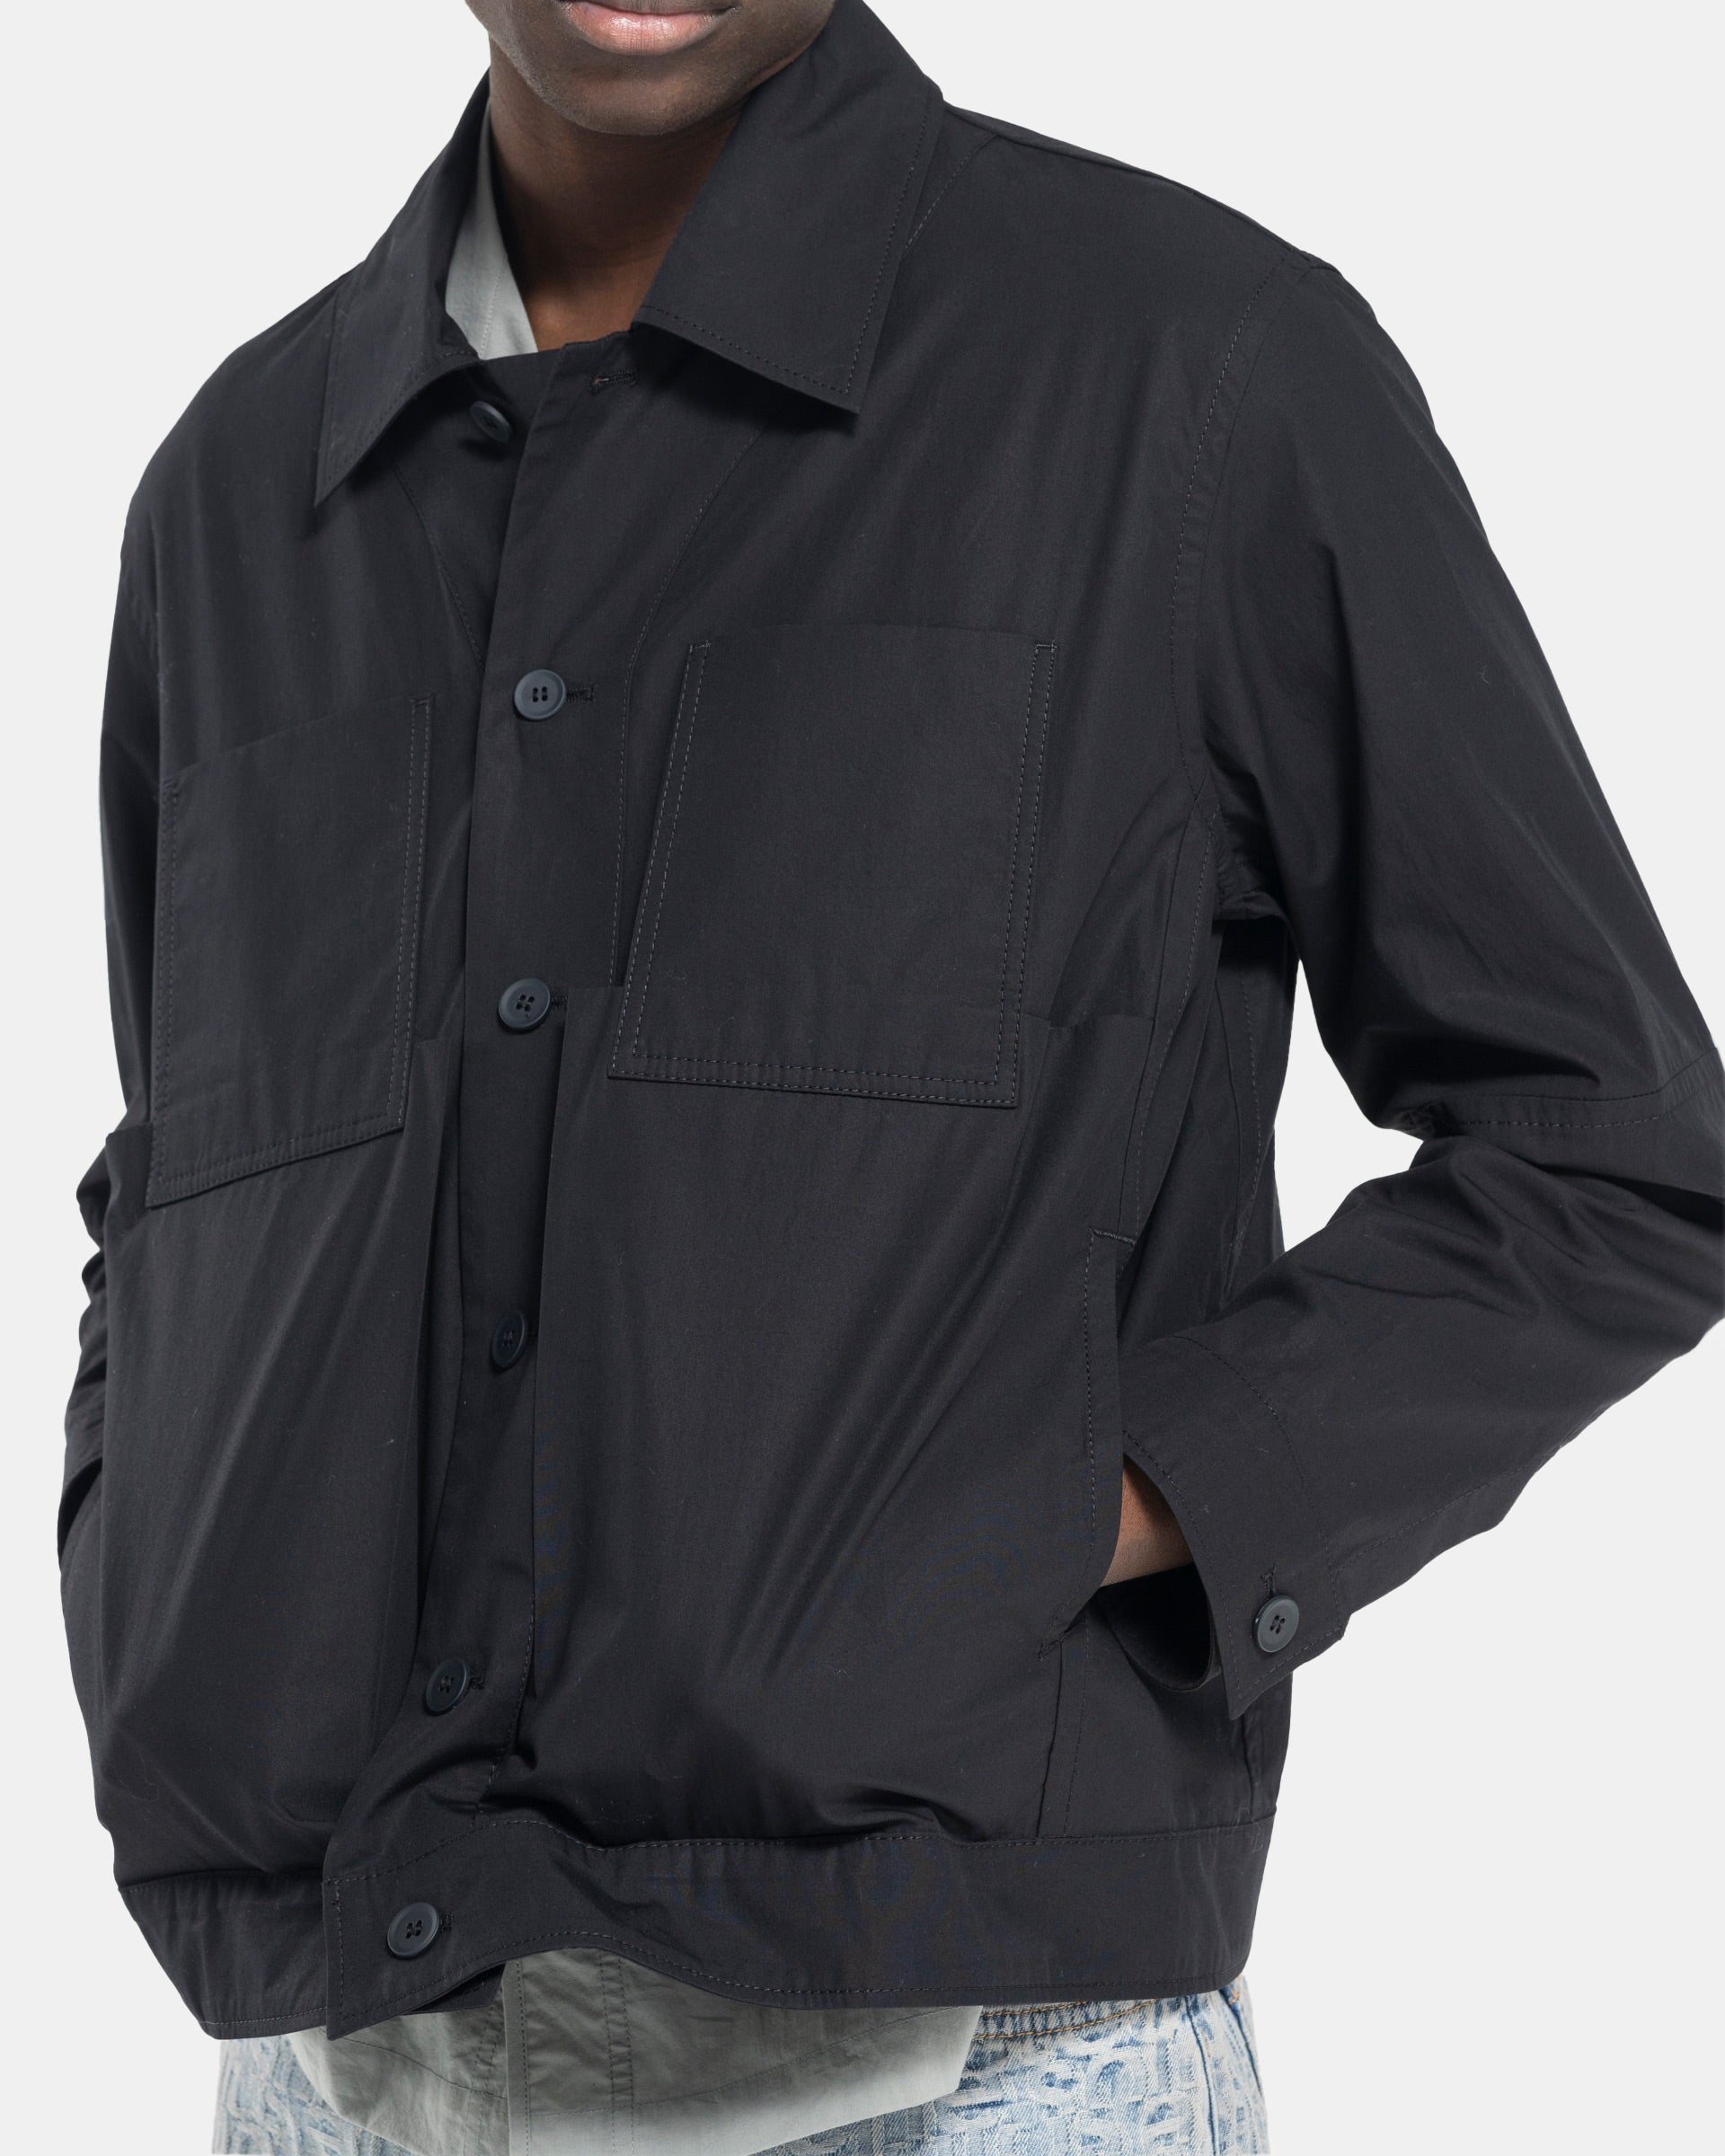 Model wearing Craig Green Worker Jacket in Black on white background